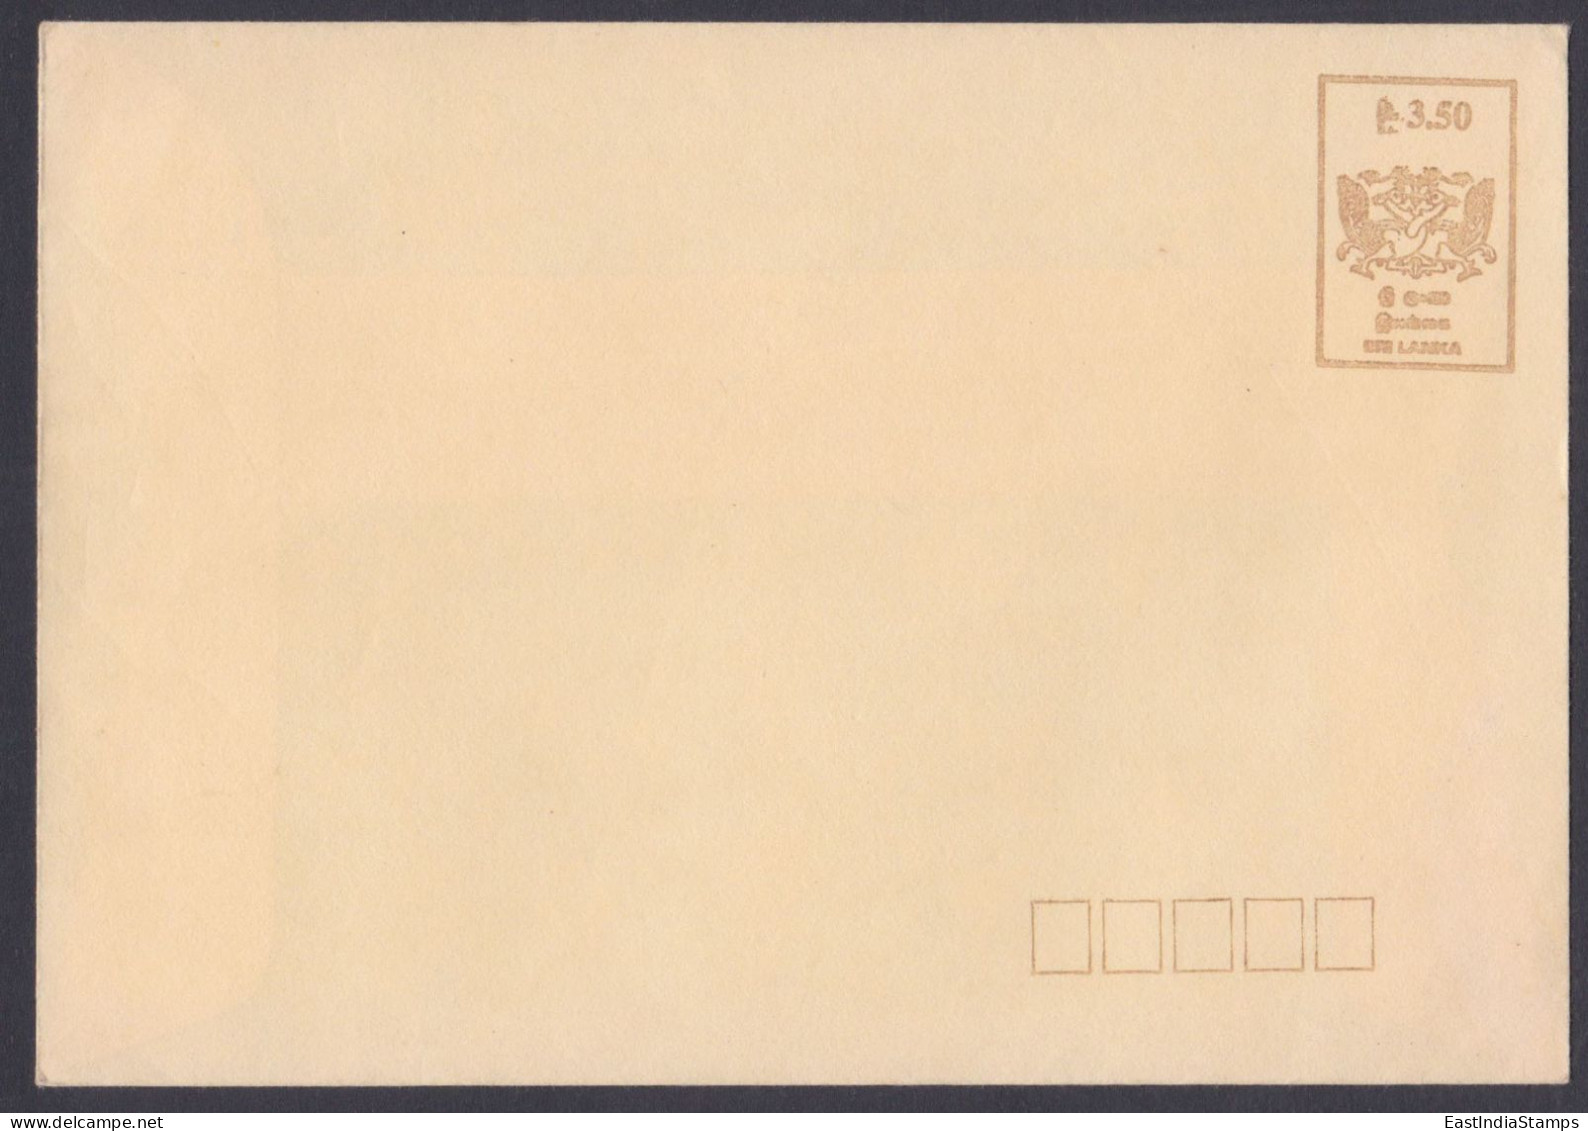 Sri Lanka Ceylon Mint Unused 3.50Rs Envelope, Cover, Postal Stationery - Sri Lanka (Ceylon) (1948-...)